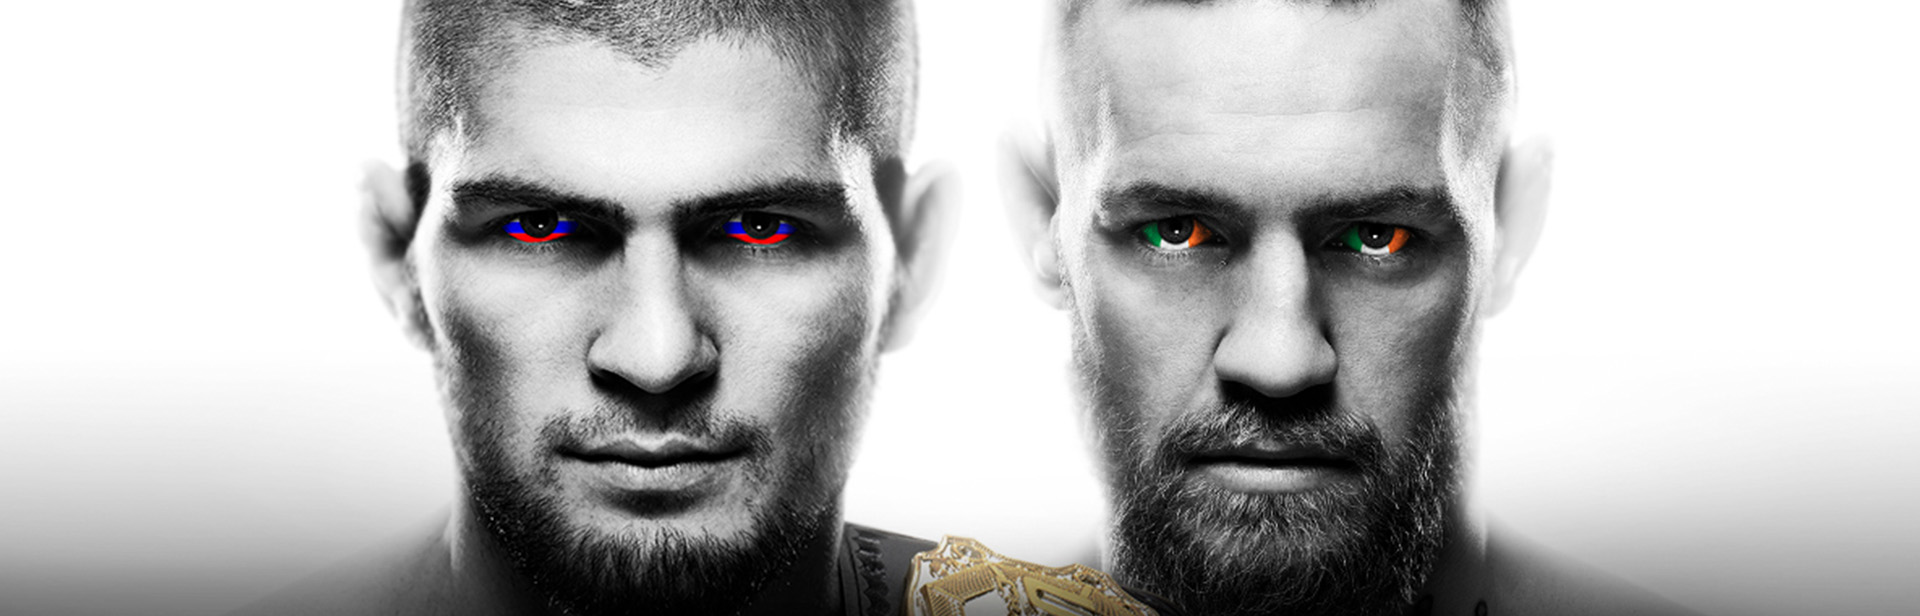 UFC 229: Preview & how to watch Khabib vs McGregor 